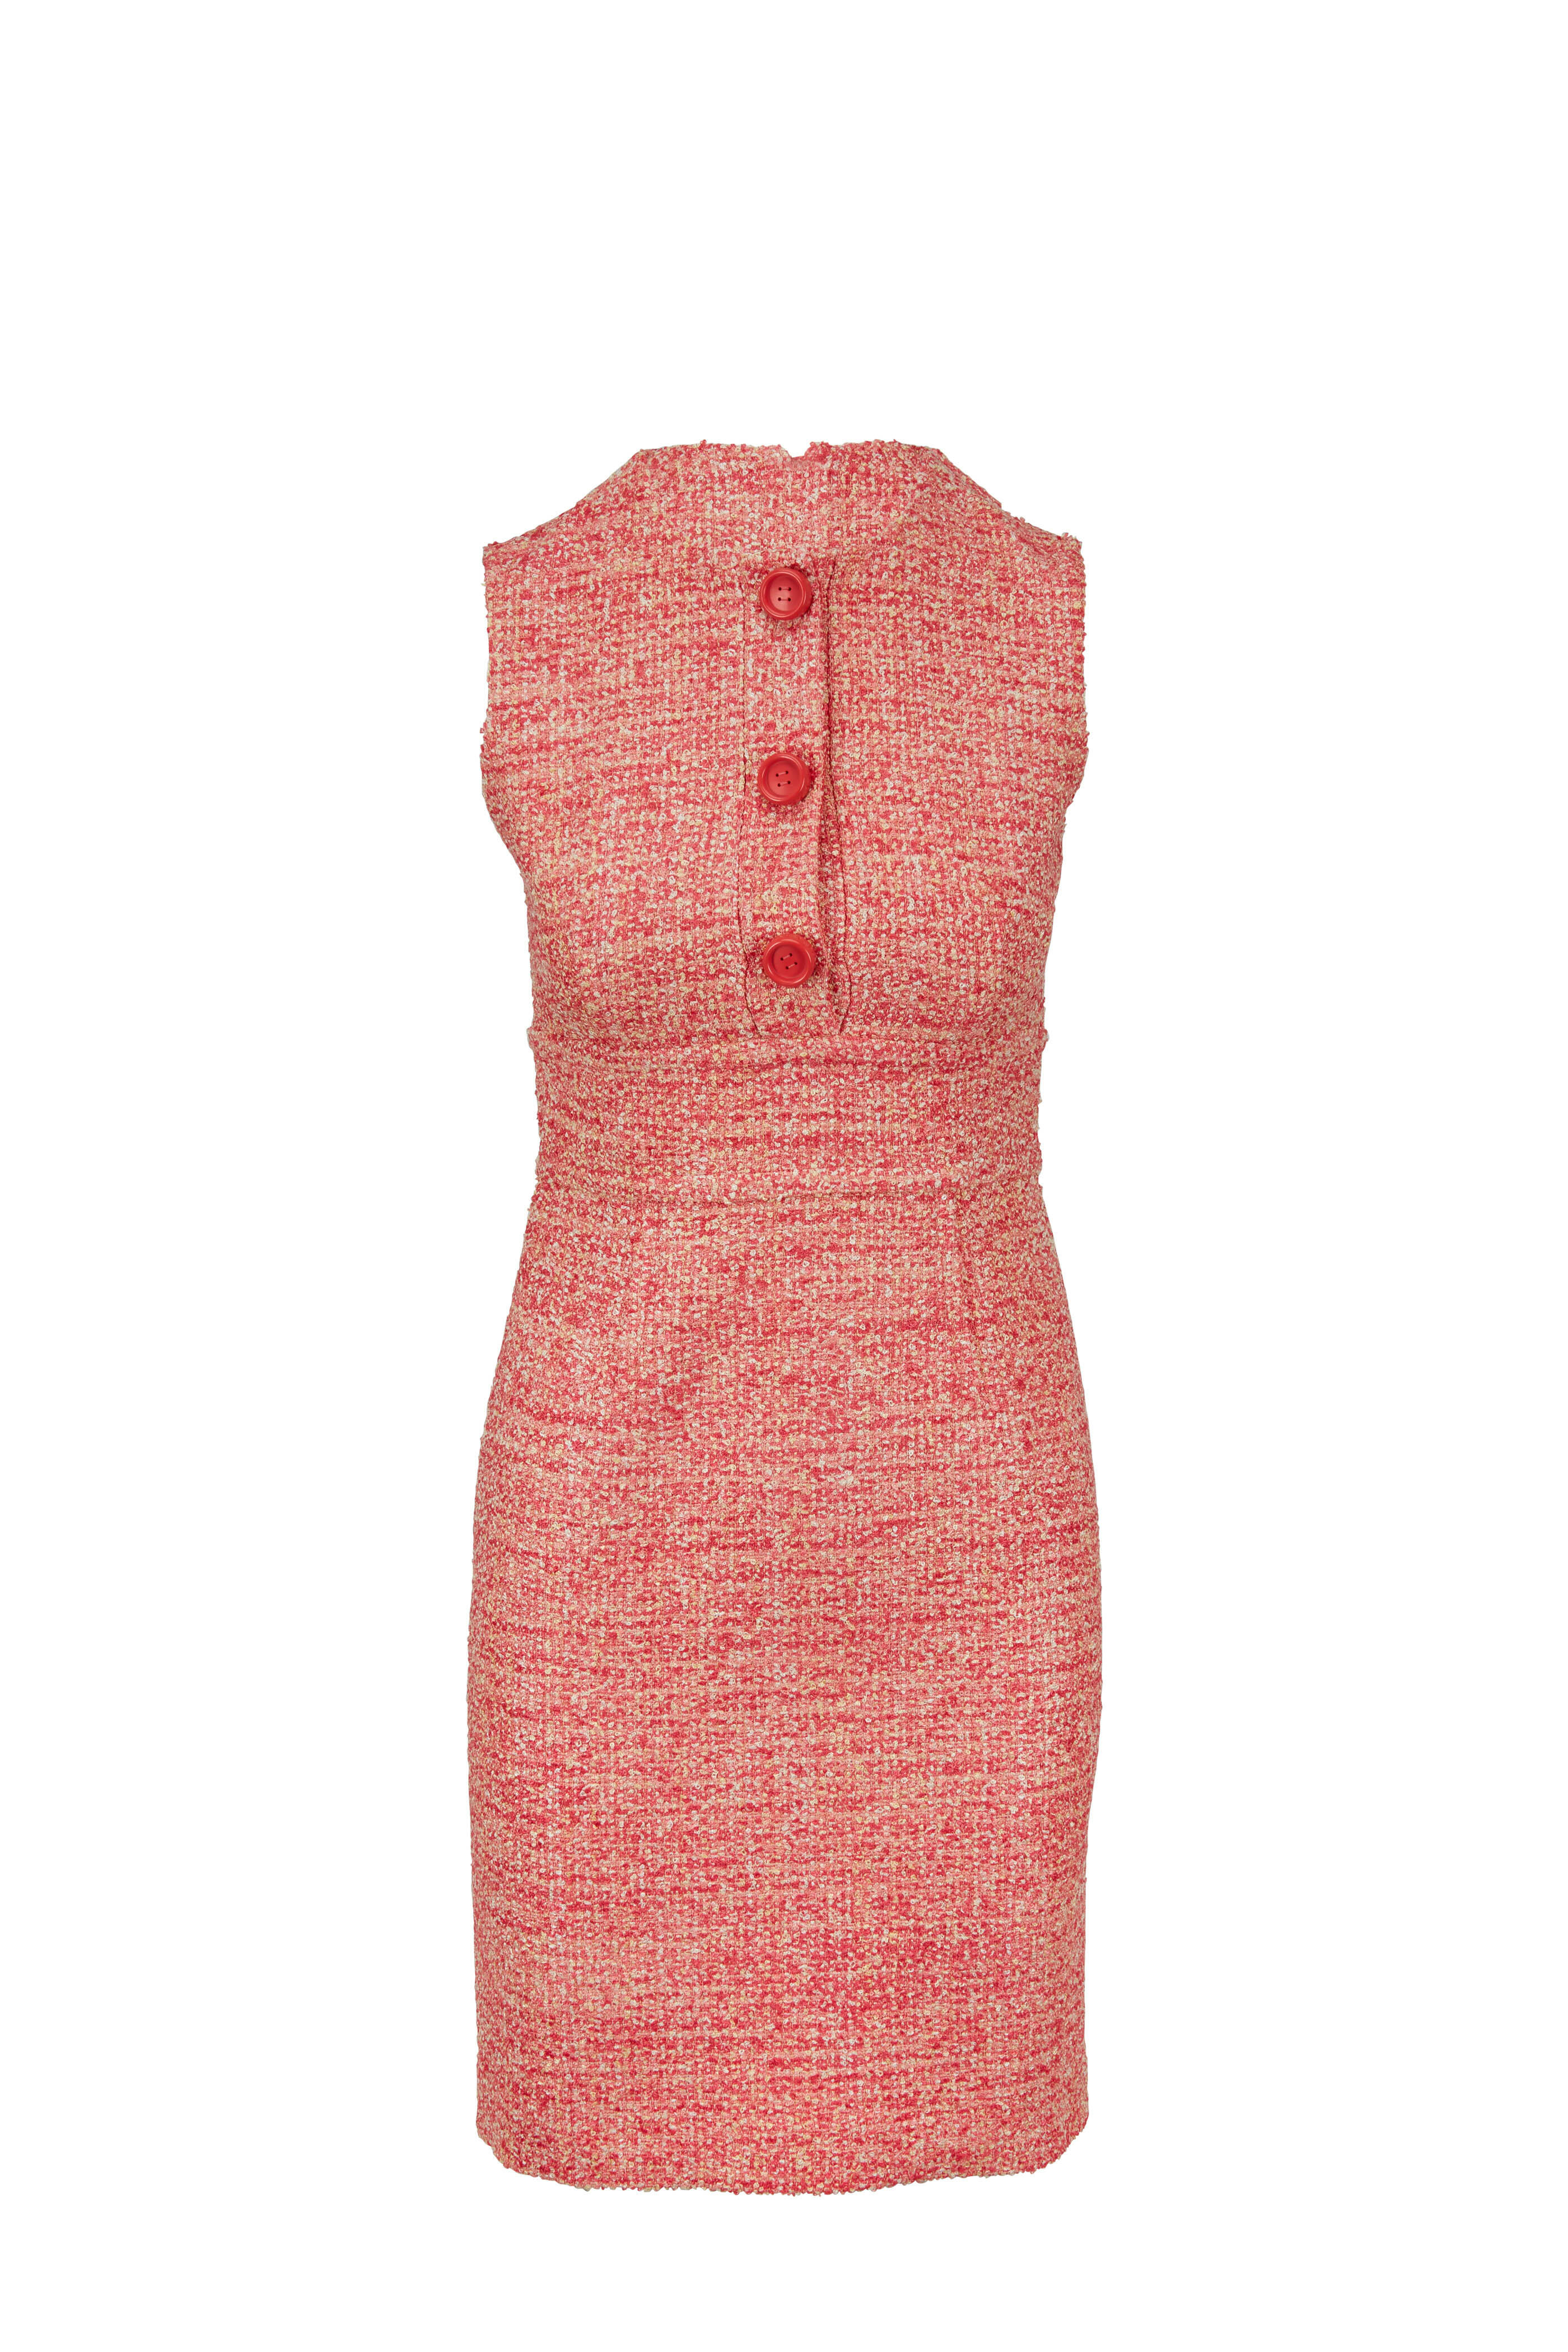 Paule Ka - Pink Tweed Button Front Dress